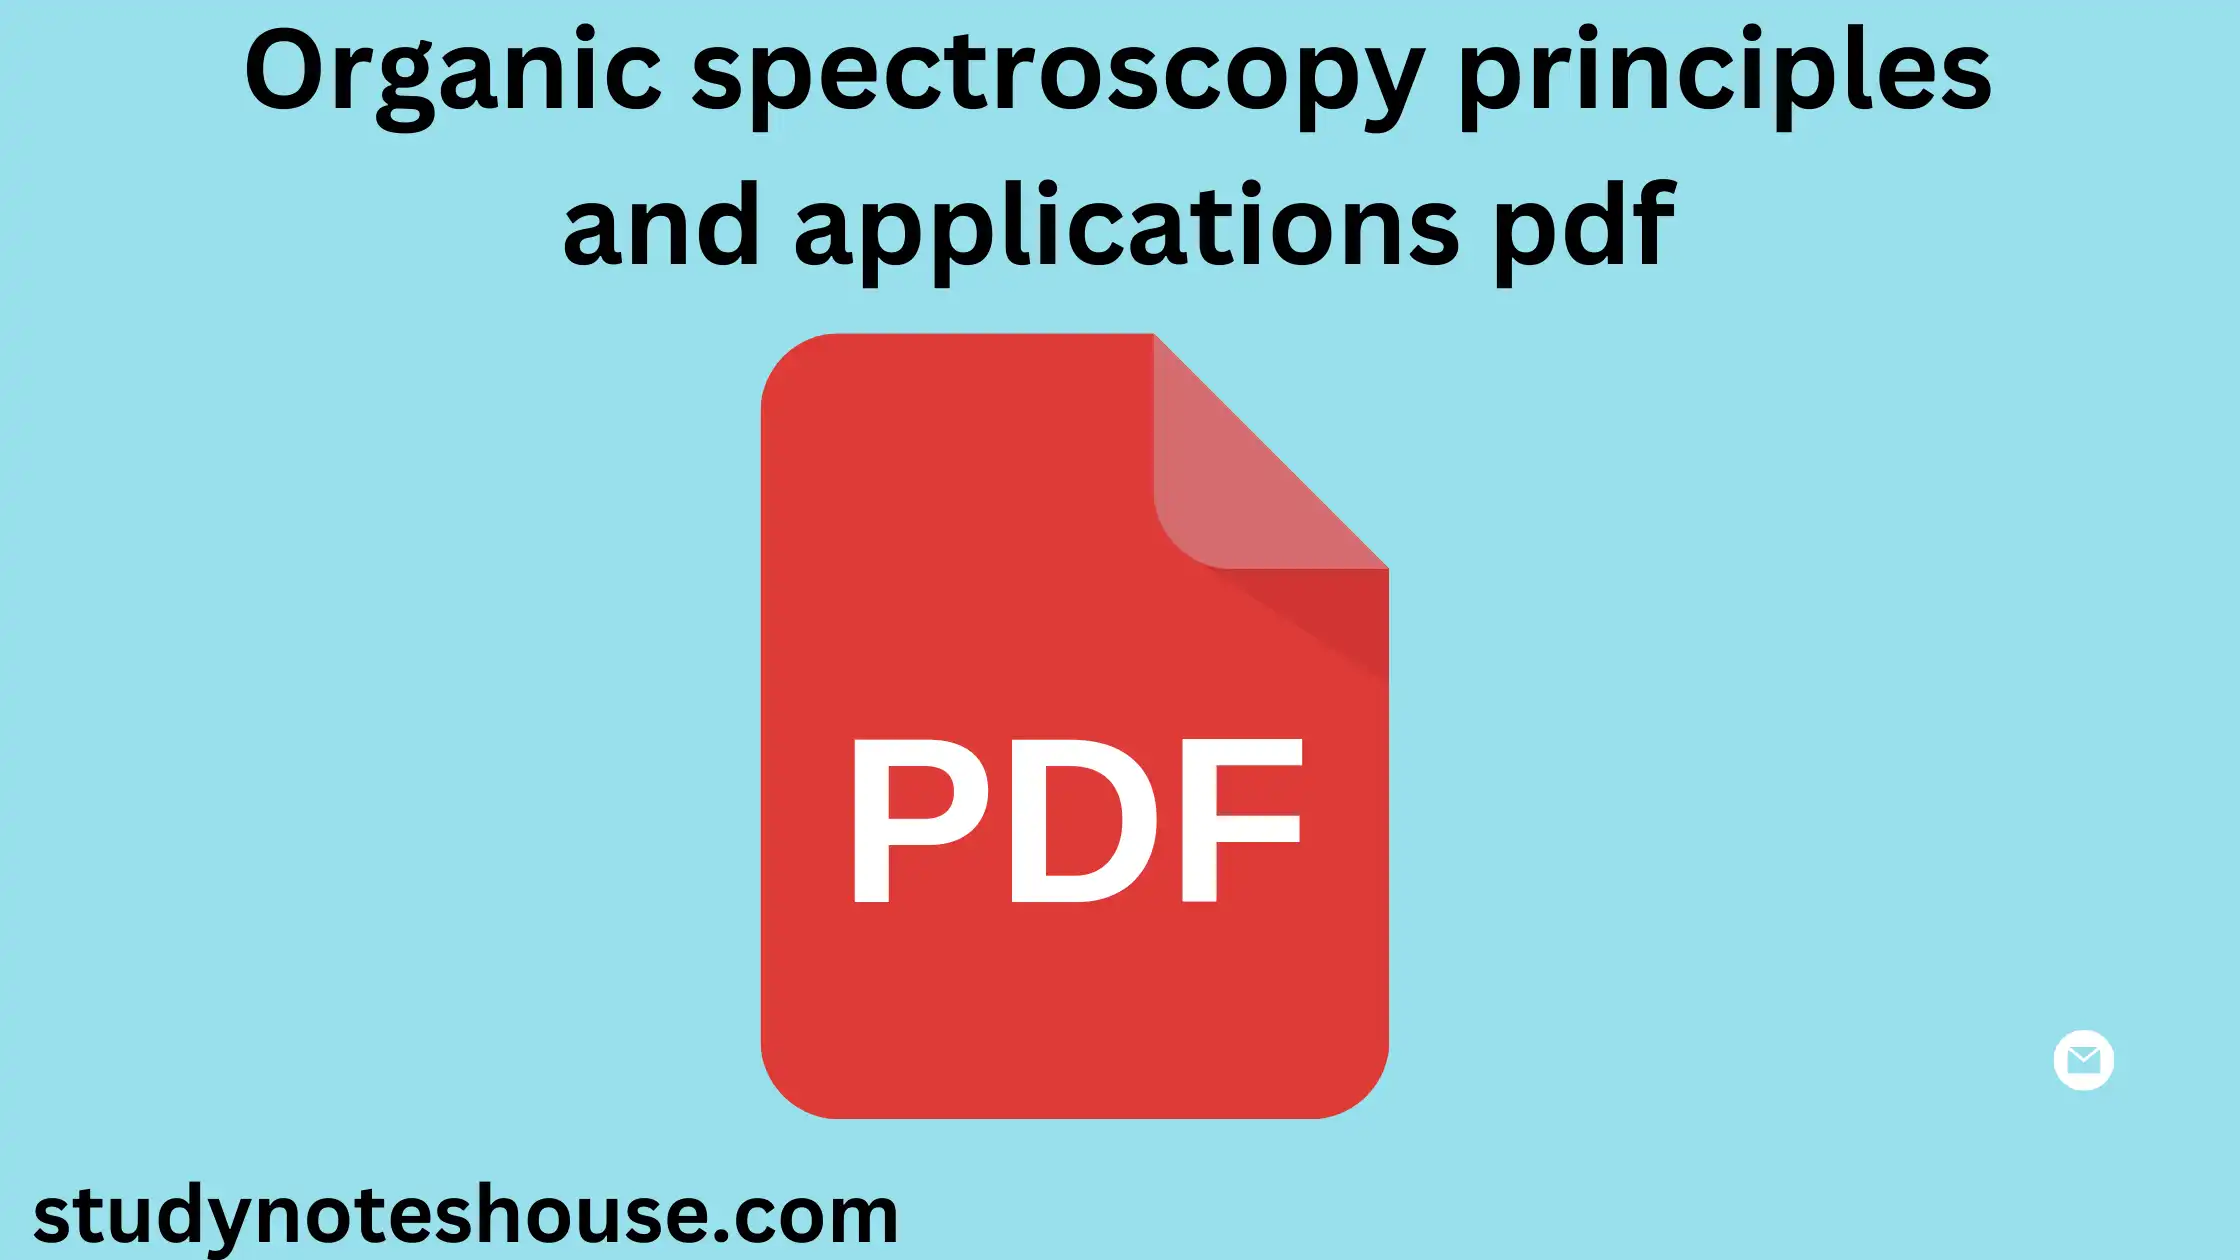 Organic spectroscopy principles and applications pdf